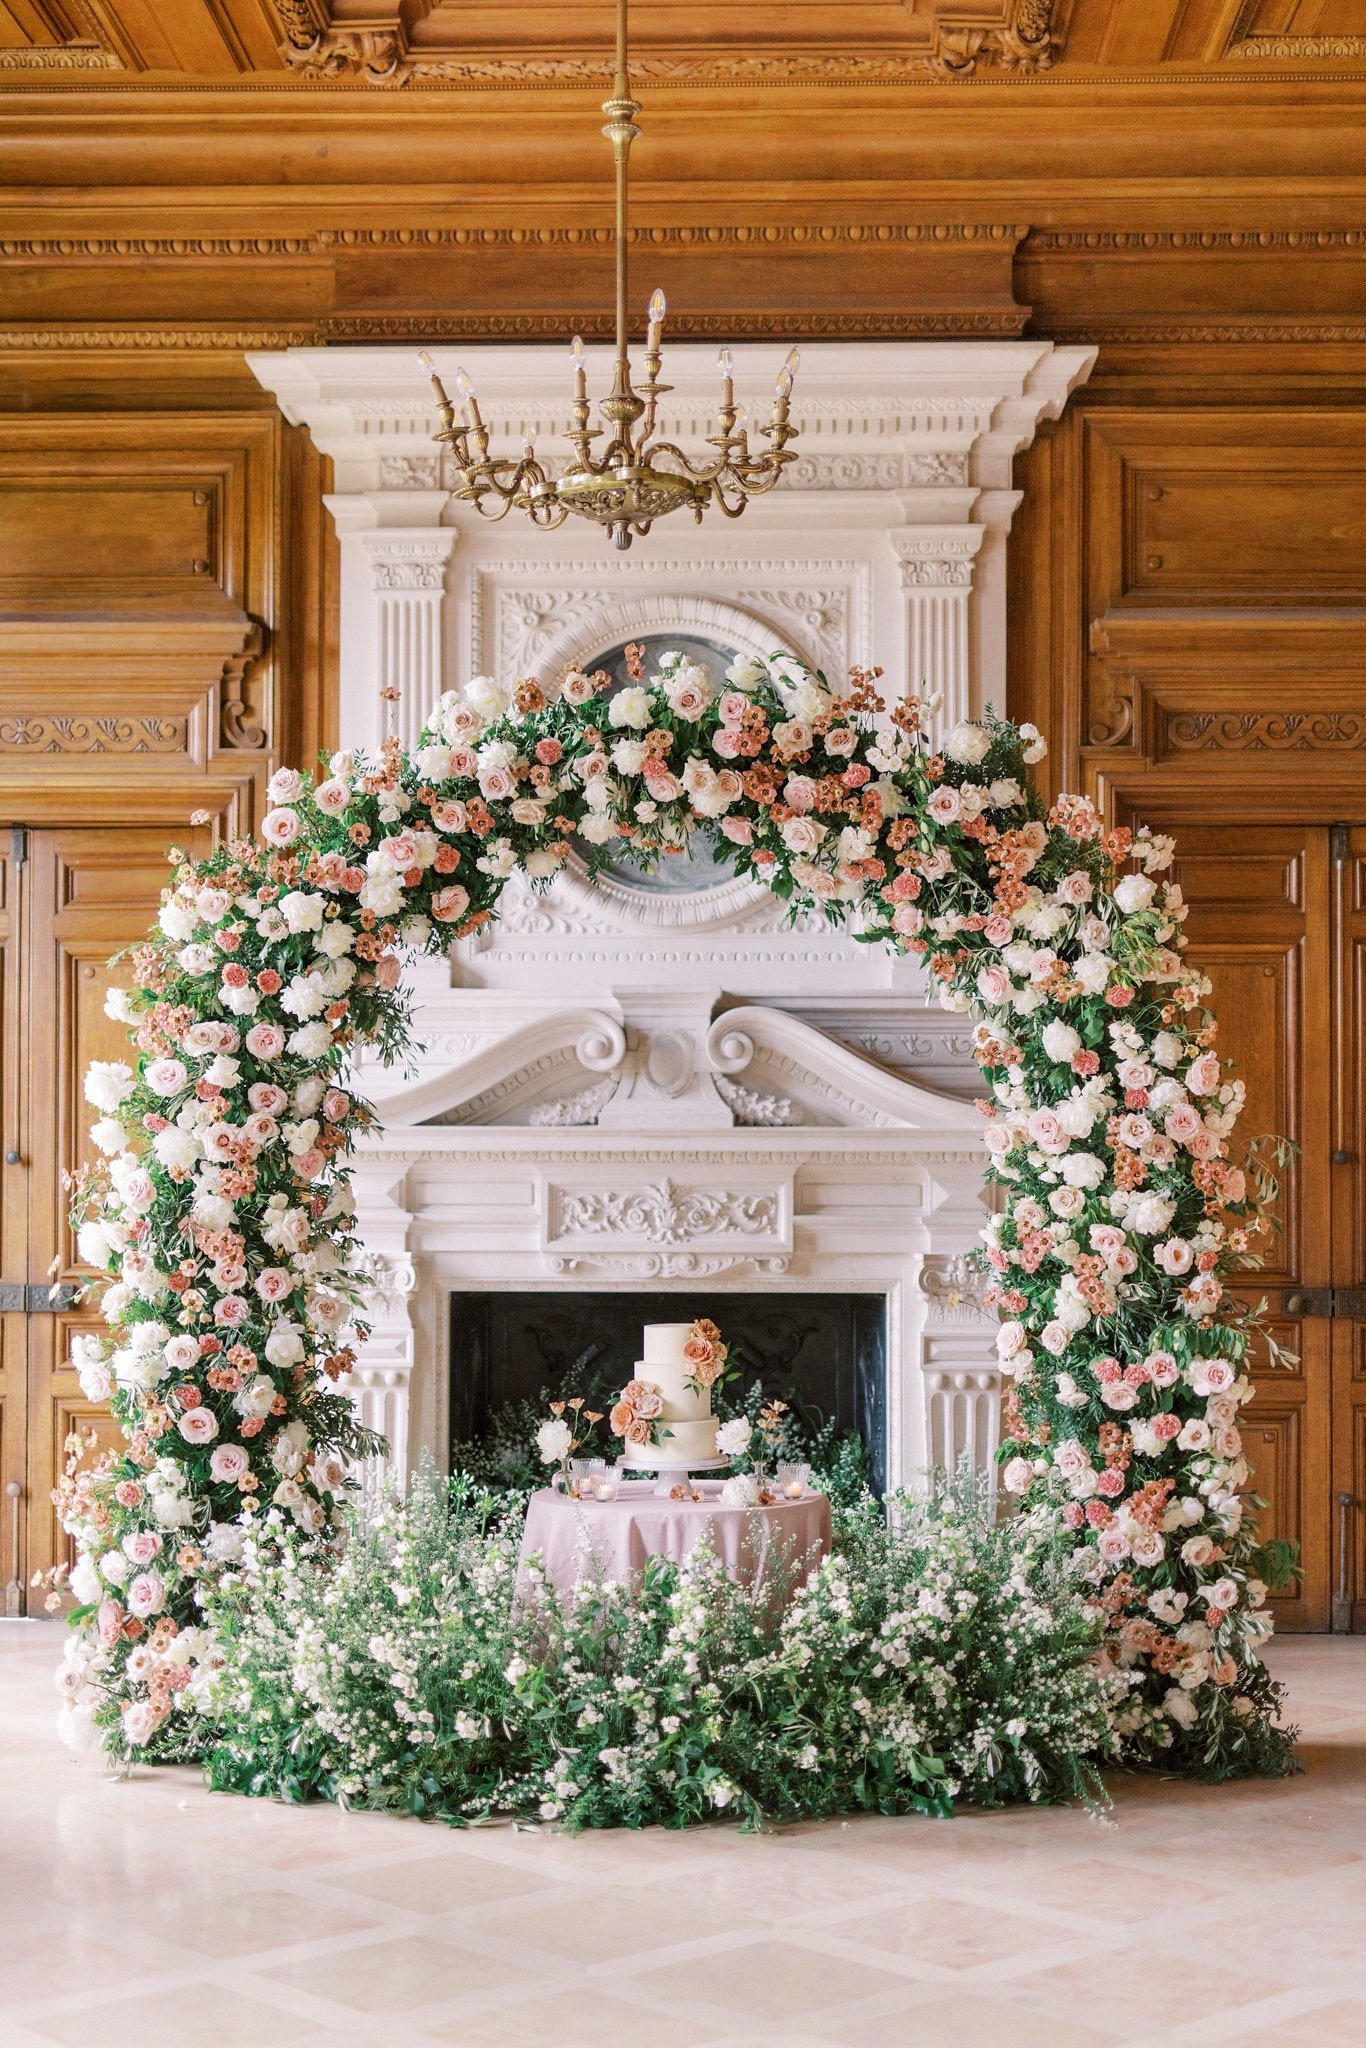 Floresie_luxury_wedding_florist_france_Lyon - 10.jpeg